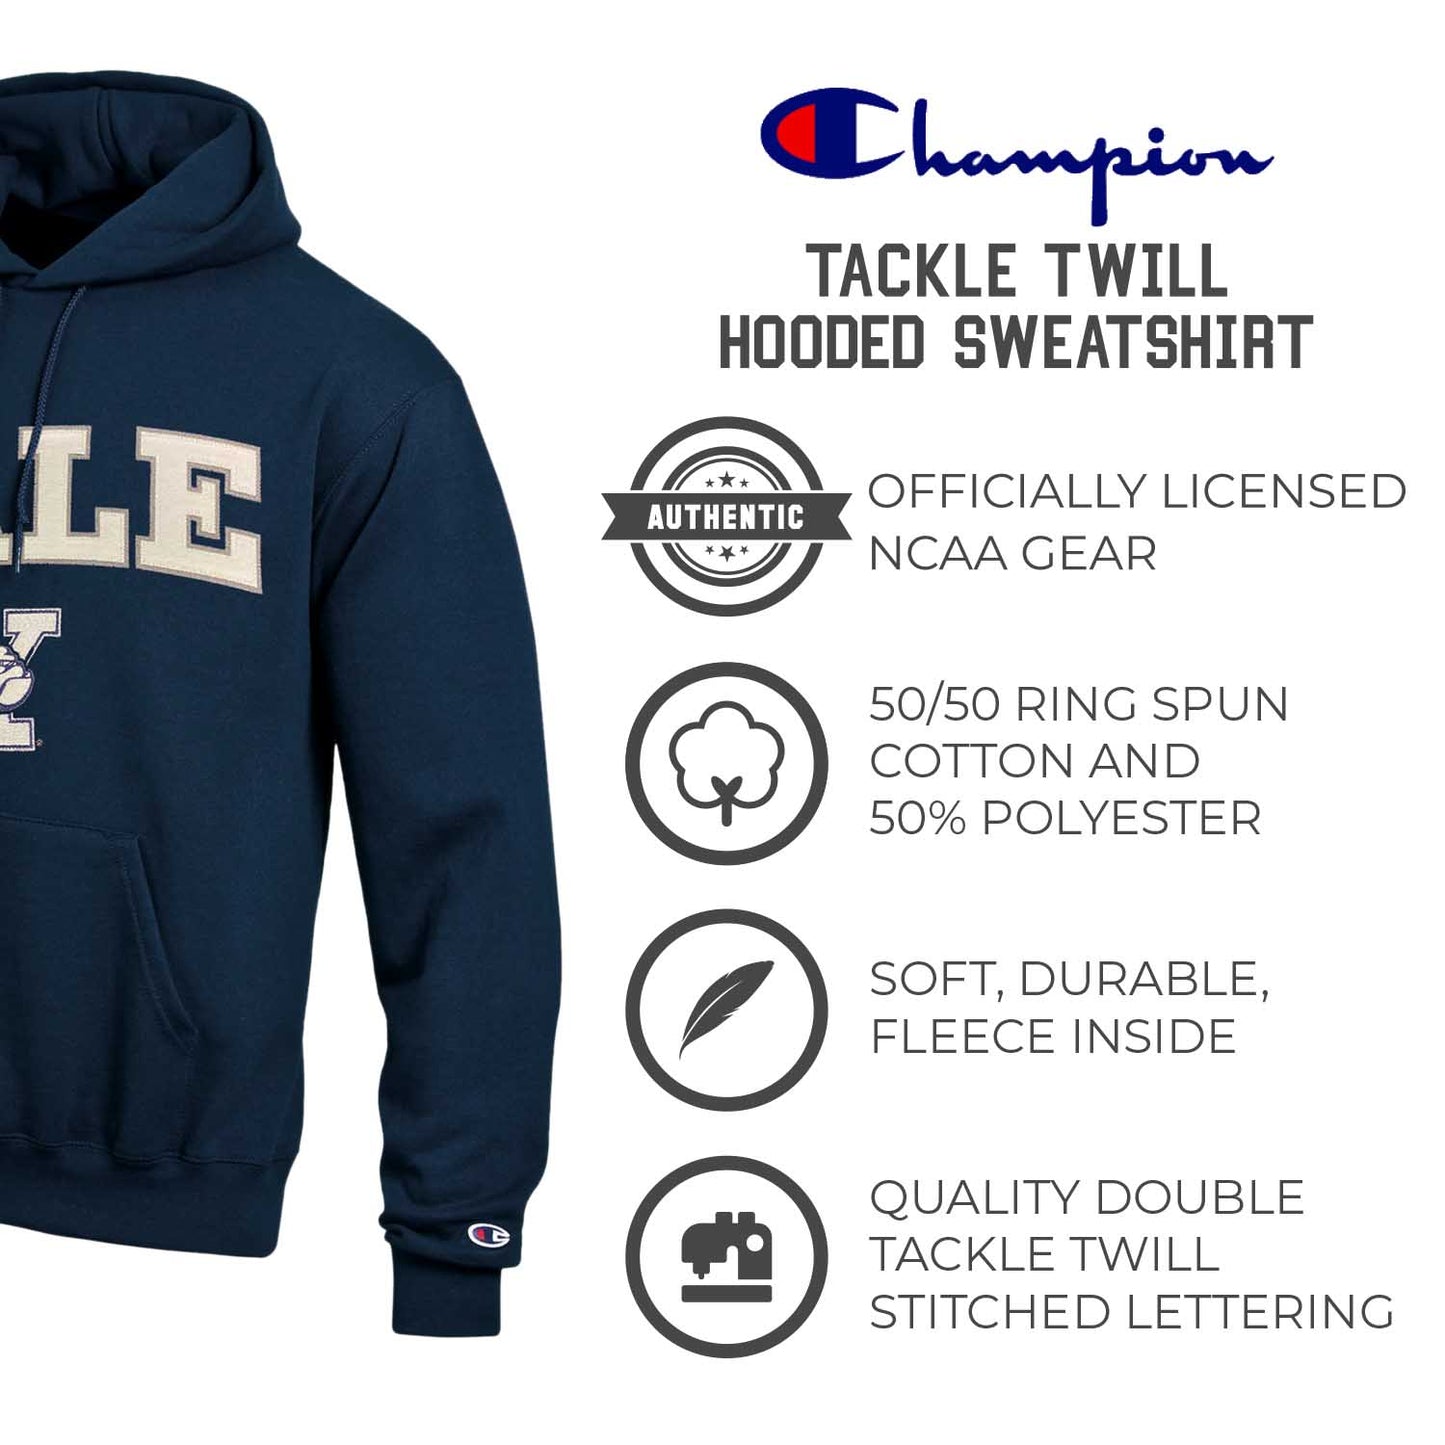 Yale Bulldogs Champion Adult Tackle Twill Hooded Sweatshirt - Navy